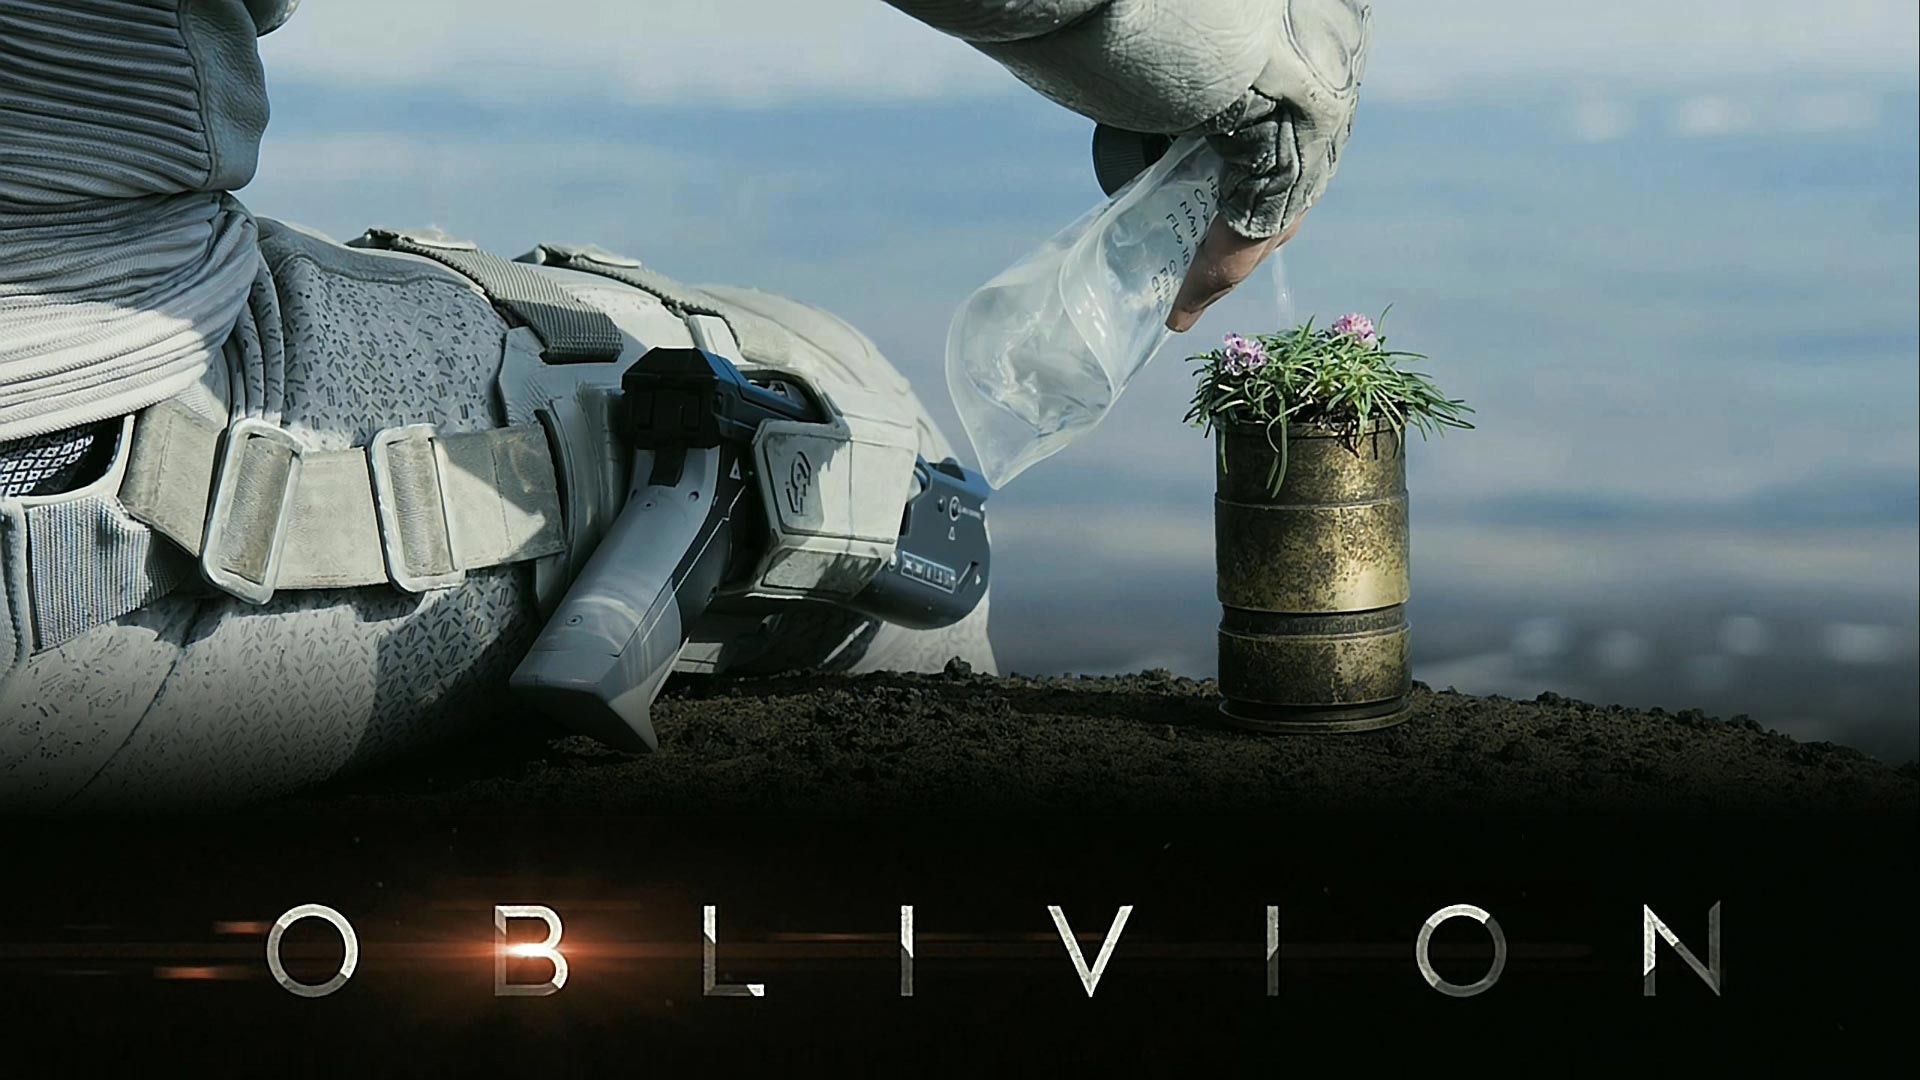 Oblivion 2013 for 1920 x 1080 HDTV 1080p resolution